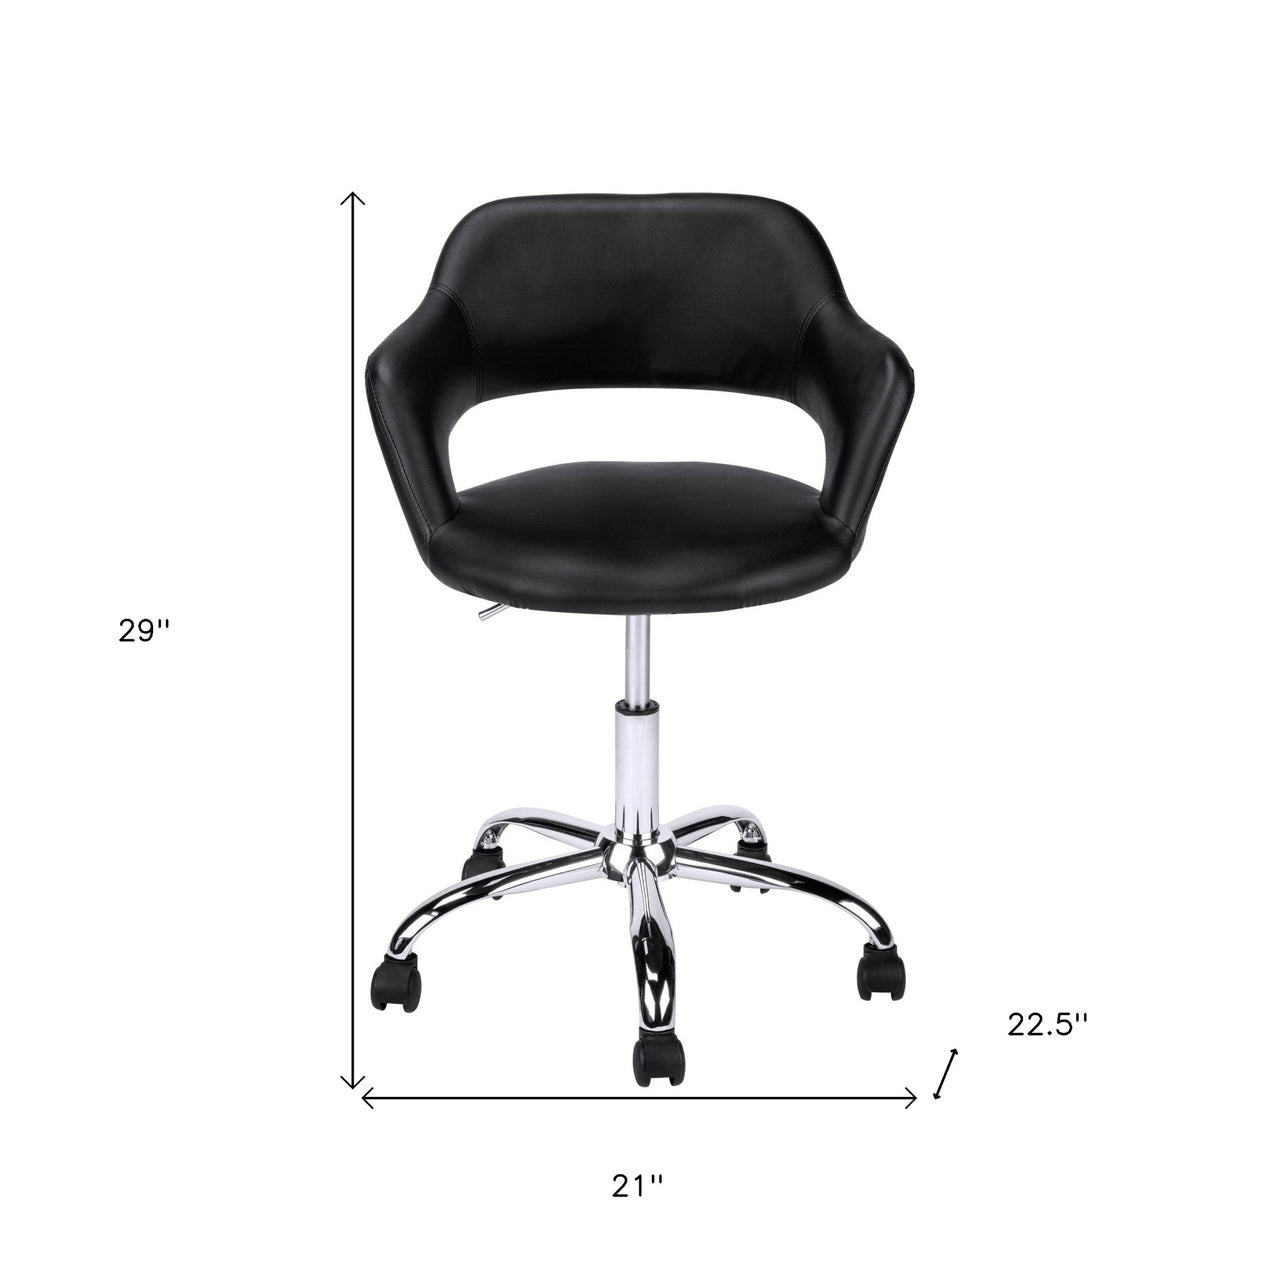 21" x 22.5" x 29" BlackChrome Metal Hydraulic Lift Base  Office Chair-3